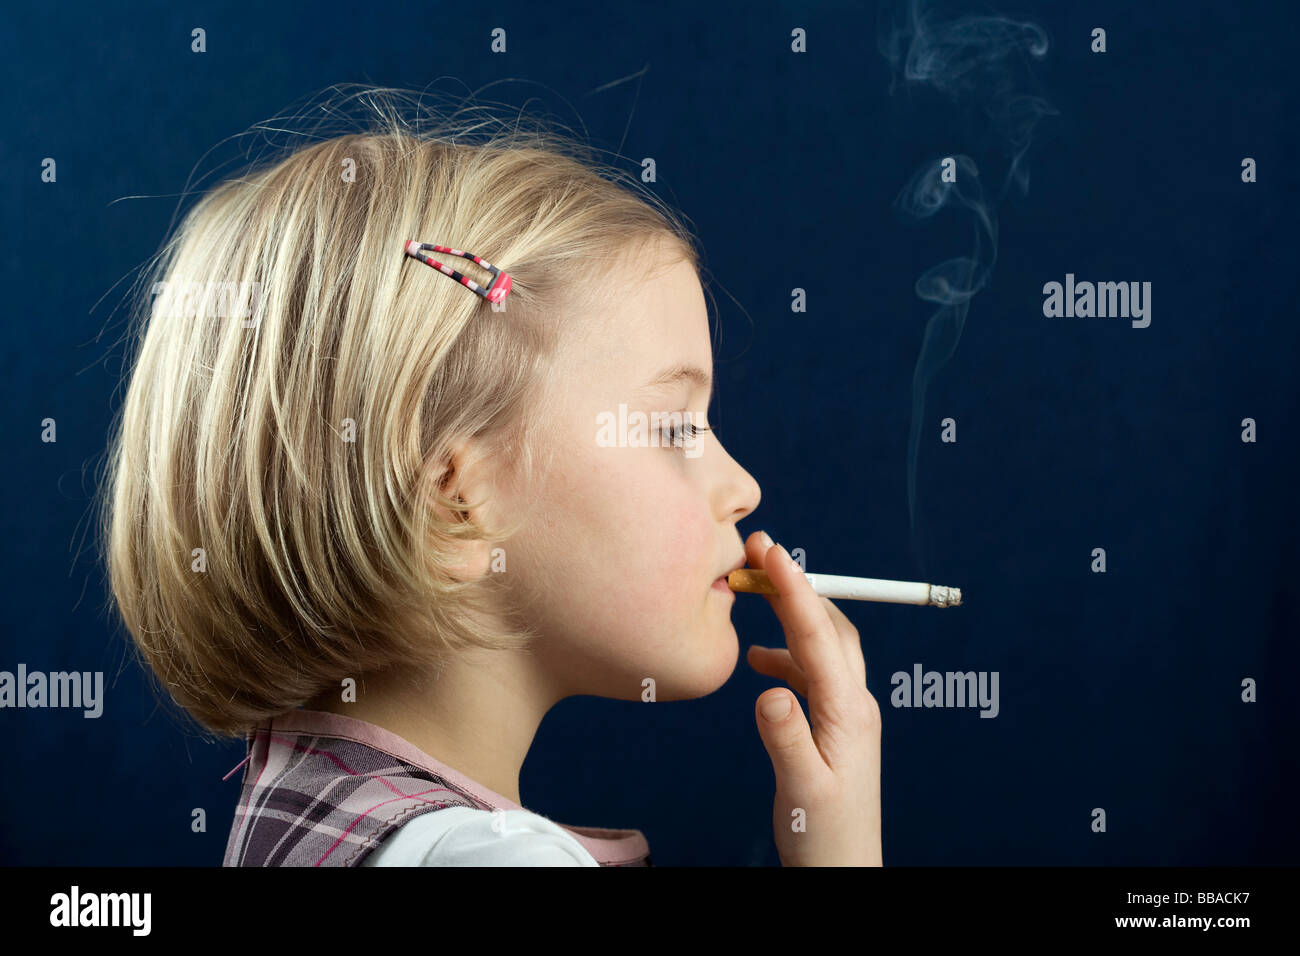 Little girl private tabu. Маленькие курящие девочки. Маленькие курильщицы. Ребенок с сигаретой. Маленькая девочка курит сигарету.